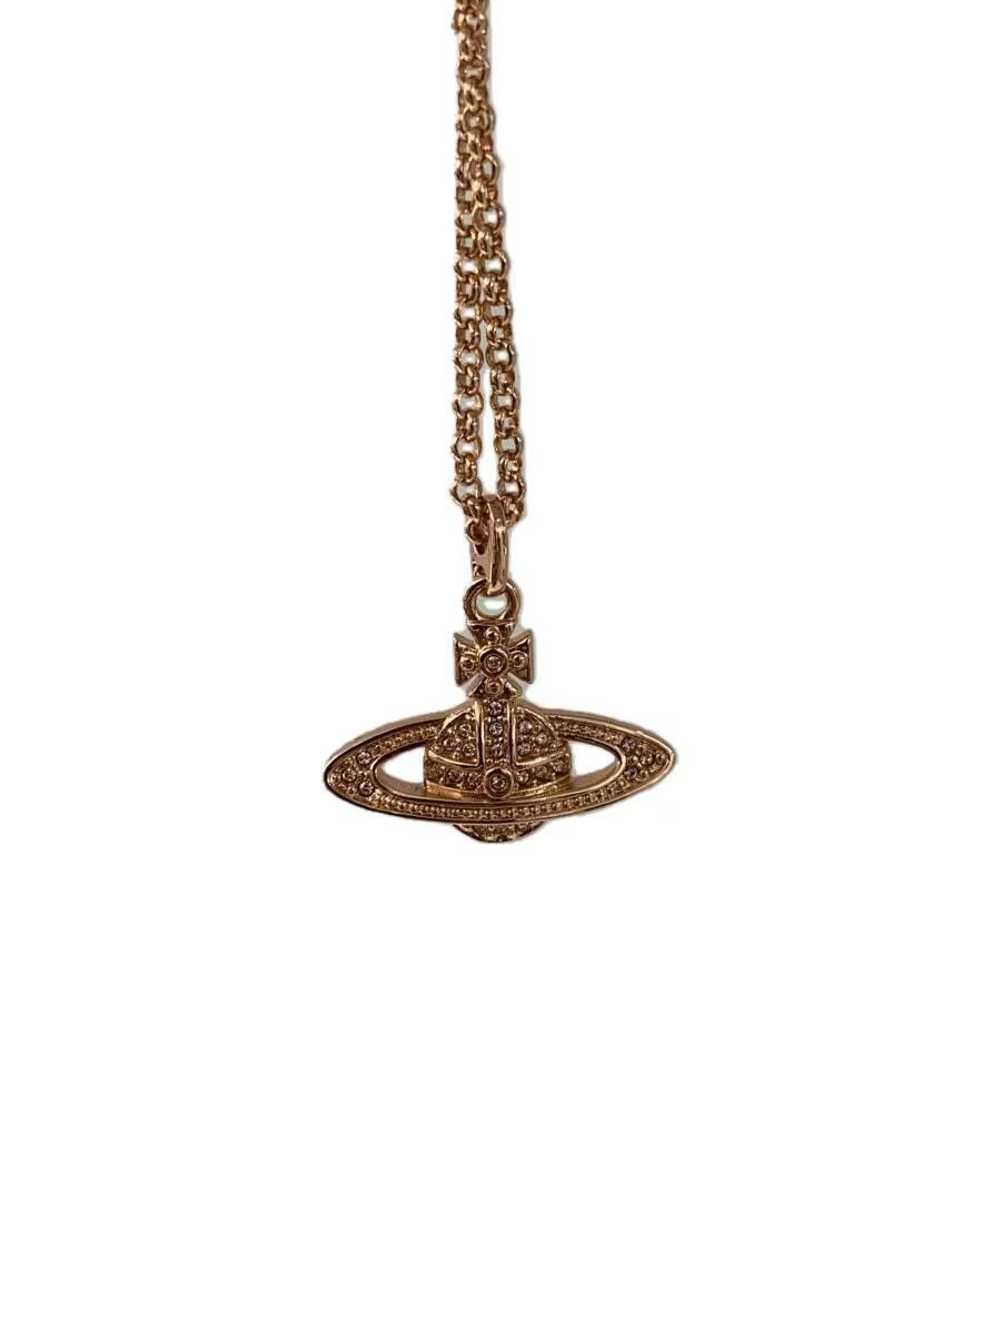 Vivienne Westwood Crystal Orb Necklace - image 1